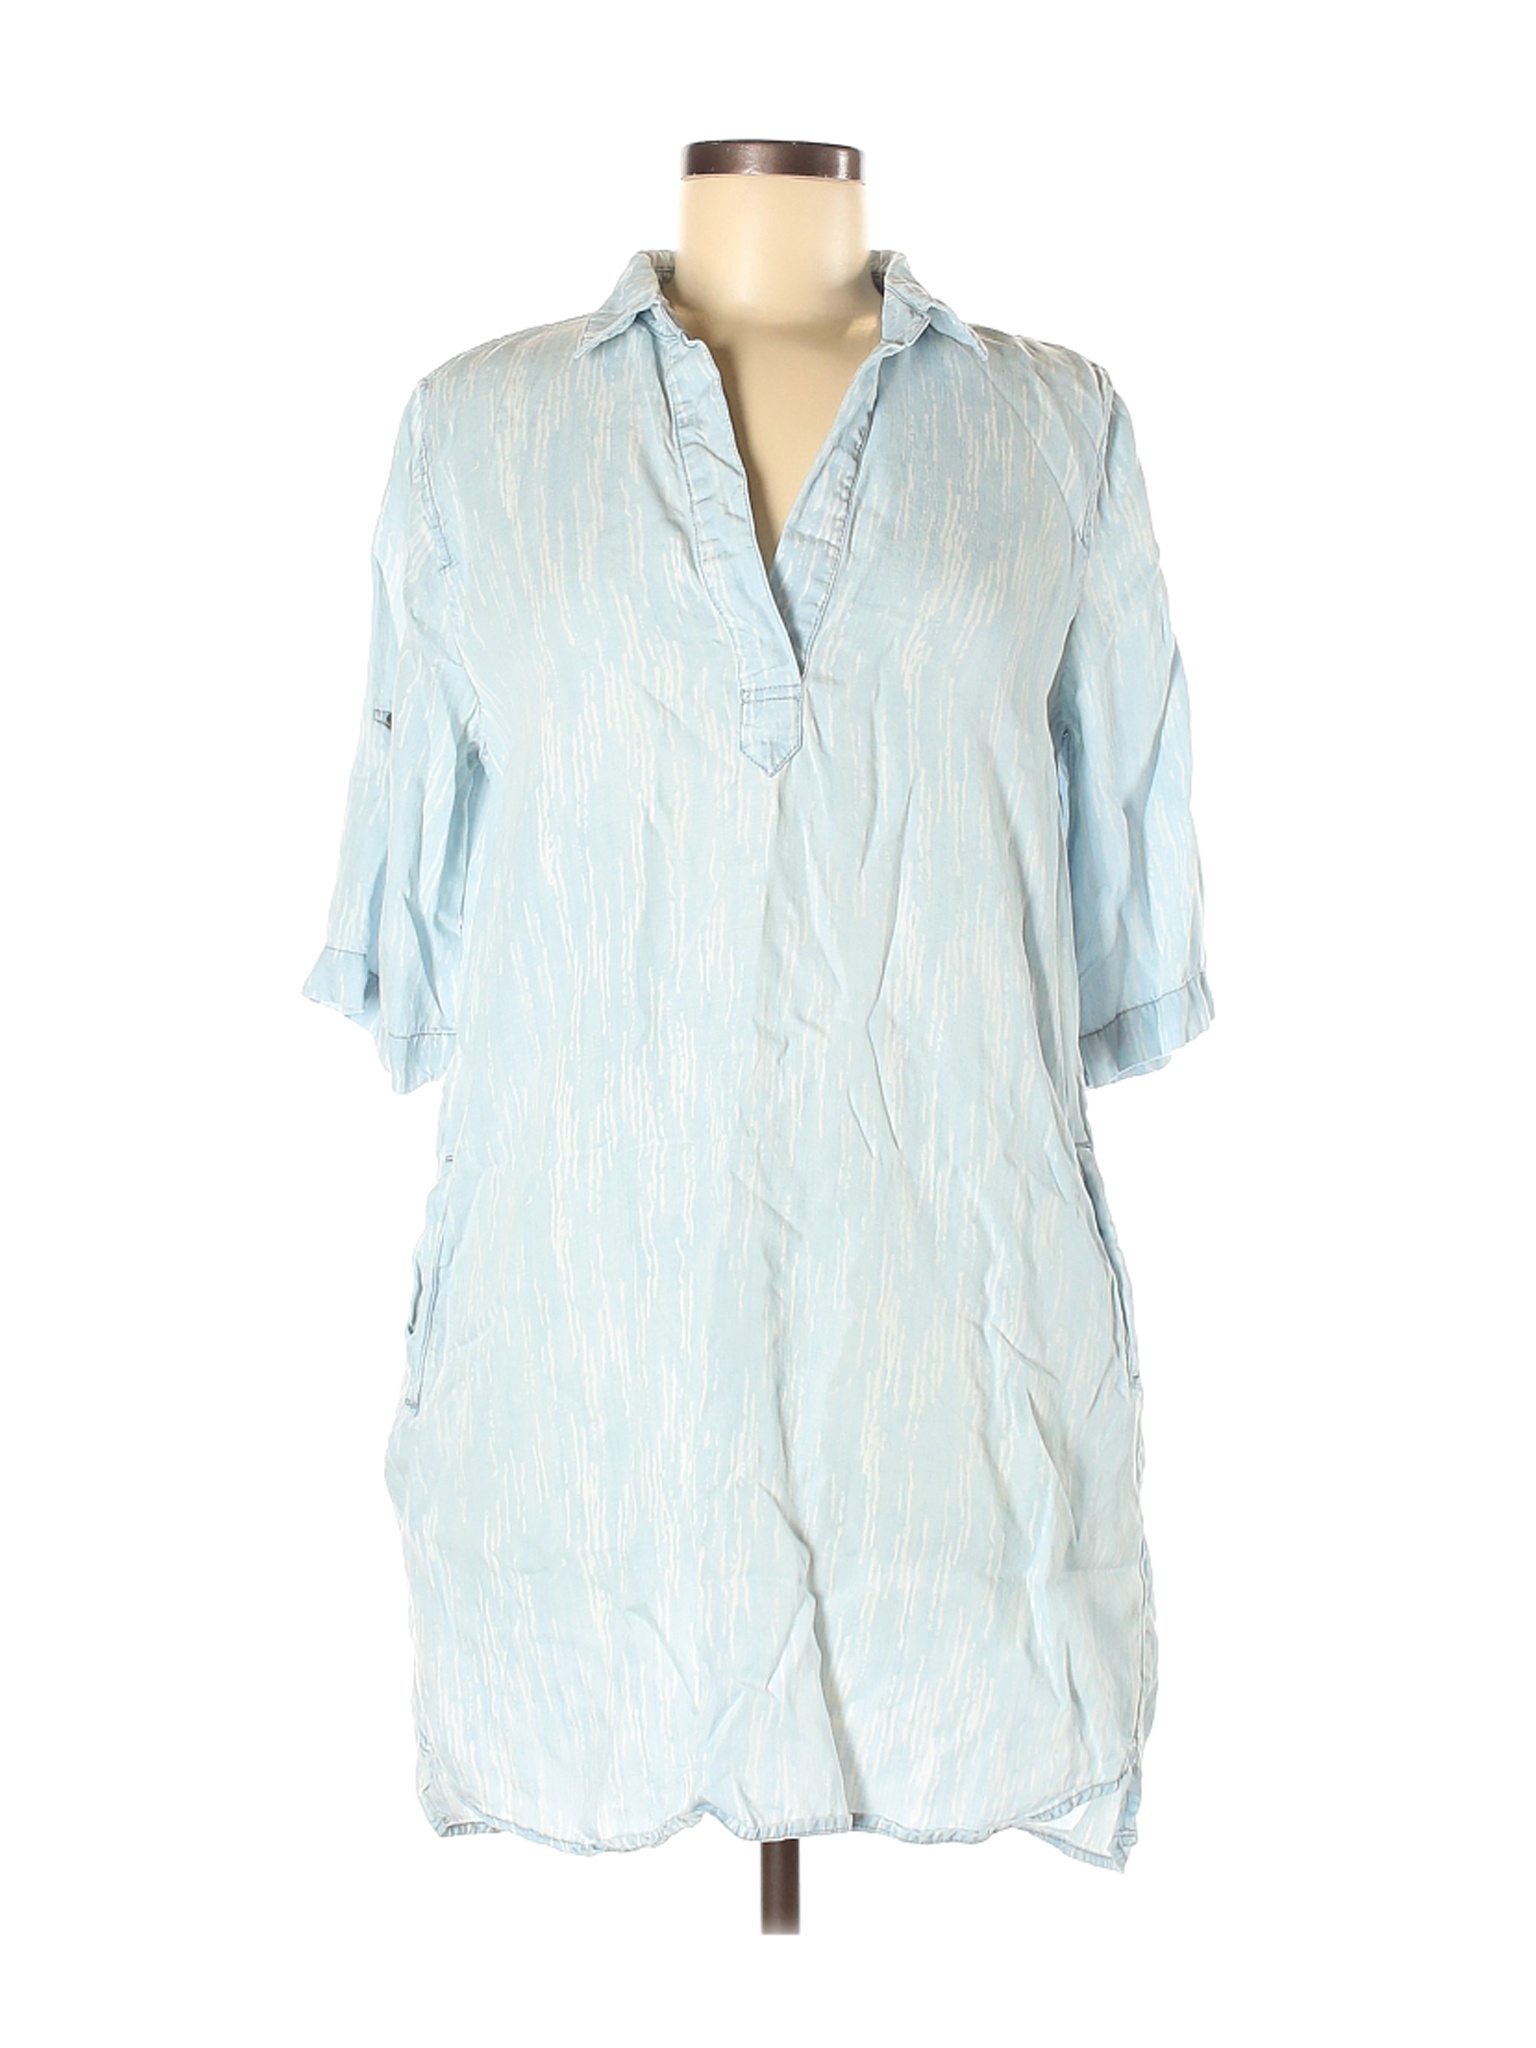 Philosophy Republic Clothing Women Blue Casual Dress M | eBay